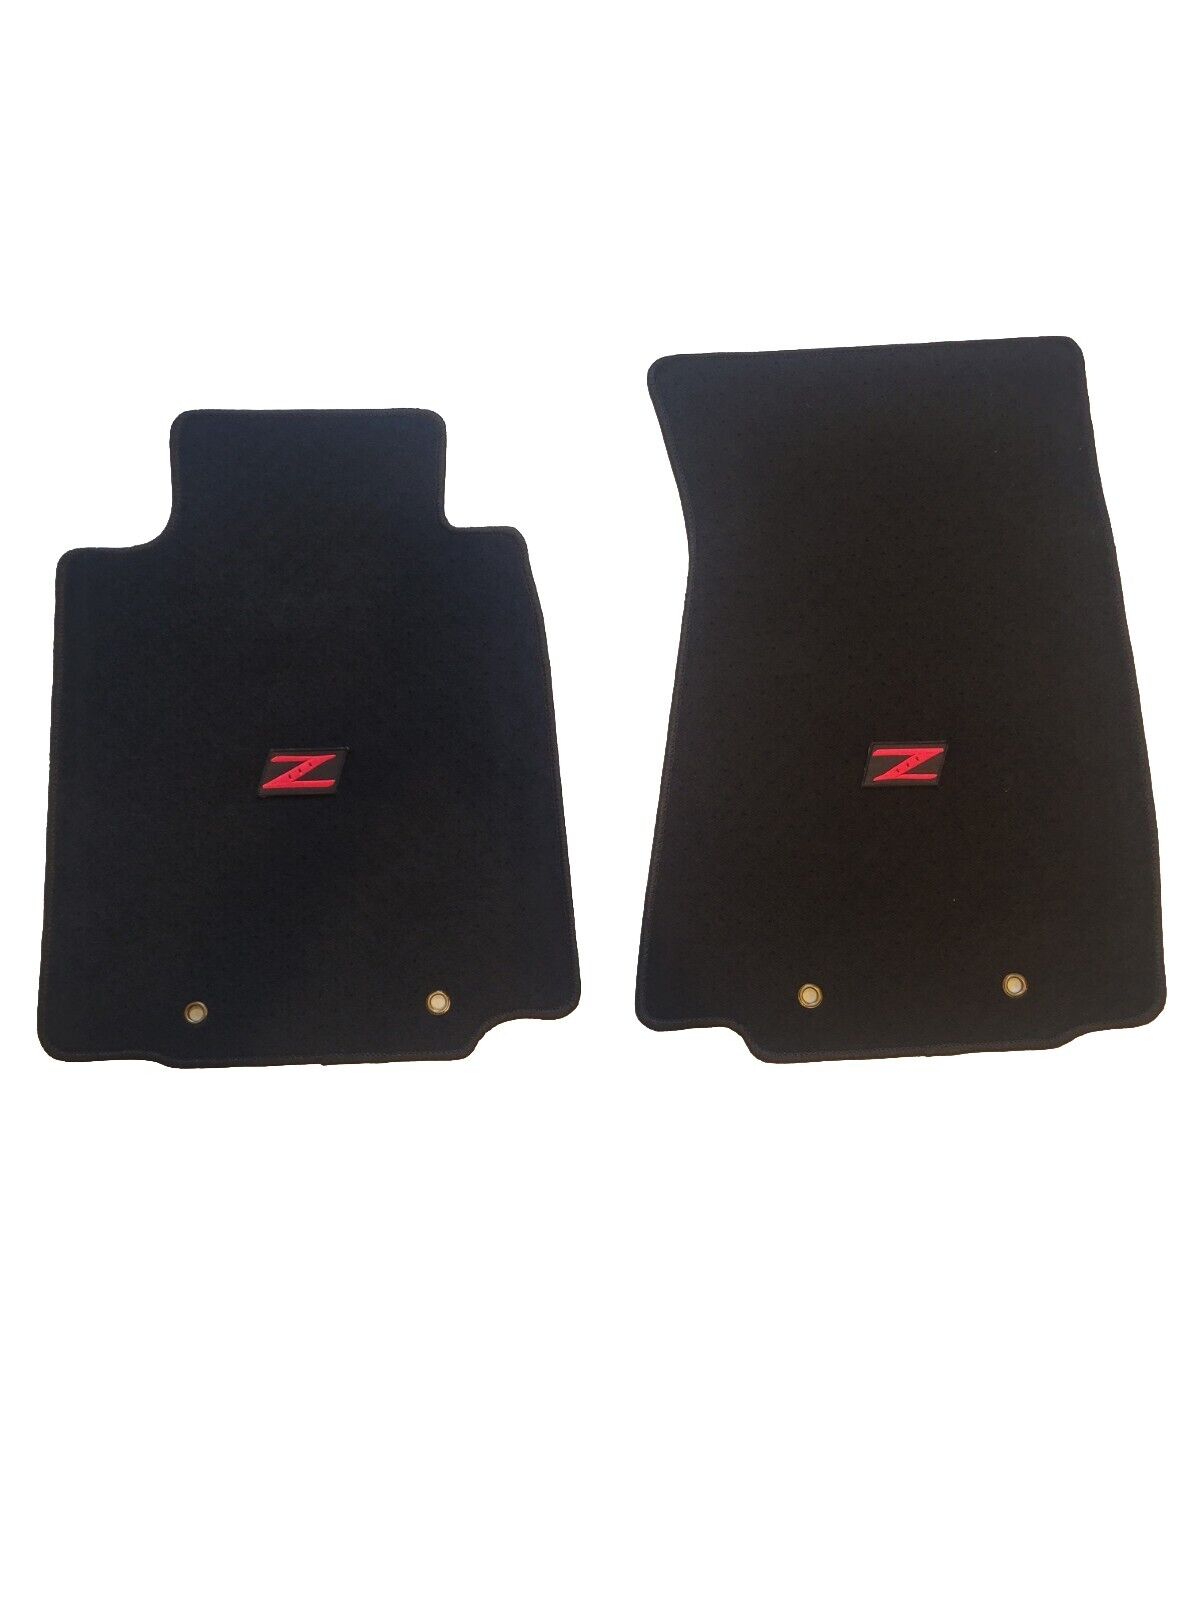 FOR 2009-2020 Nissan 370Z Car Floor Mats Nylon Black Carpets New W/Emblems